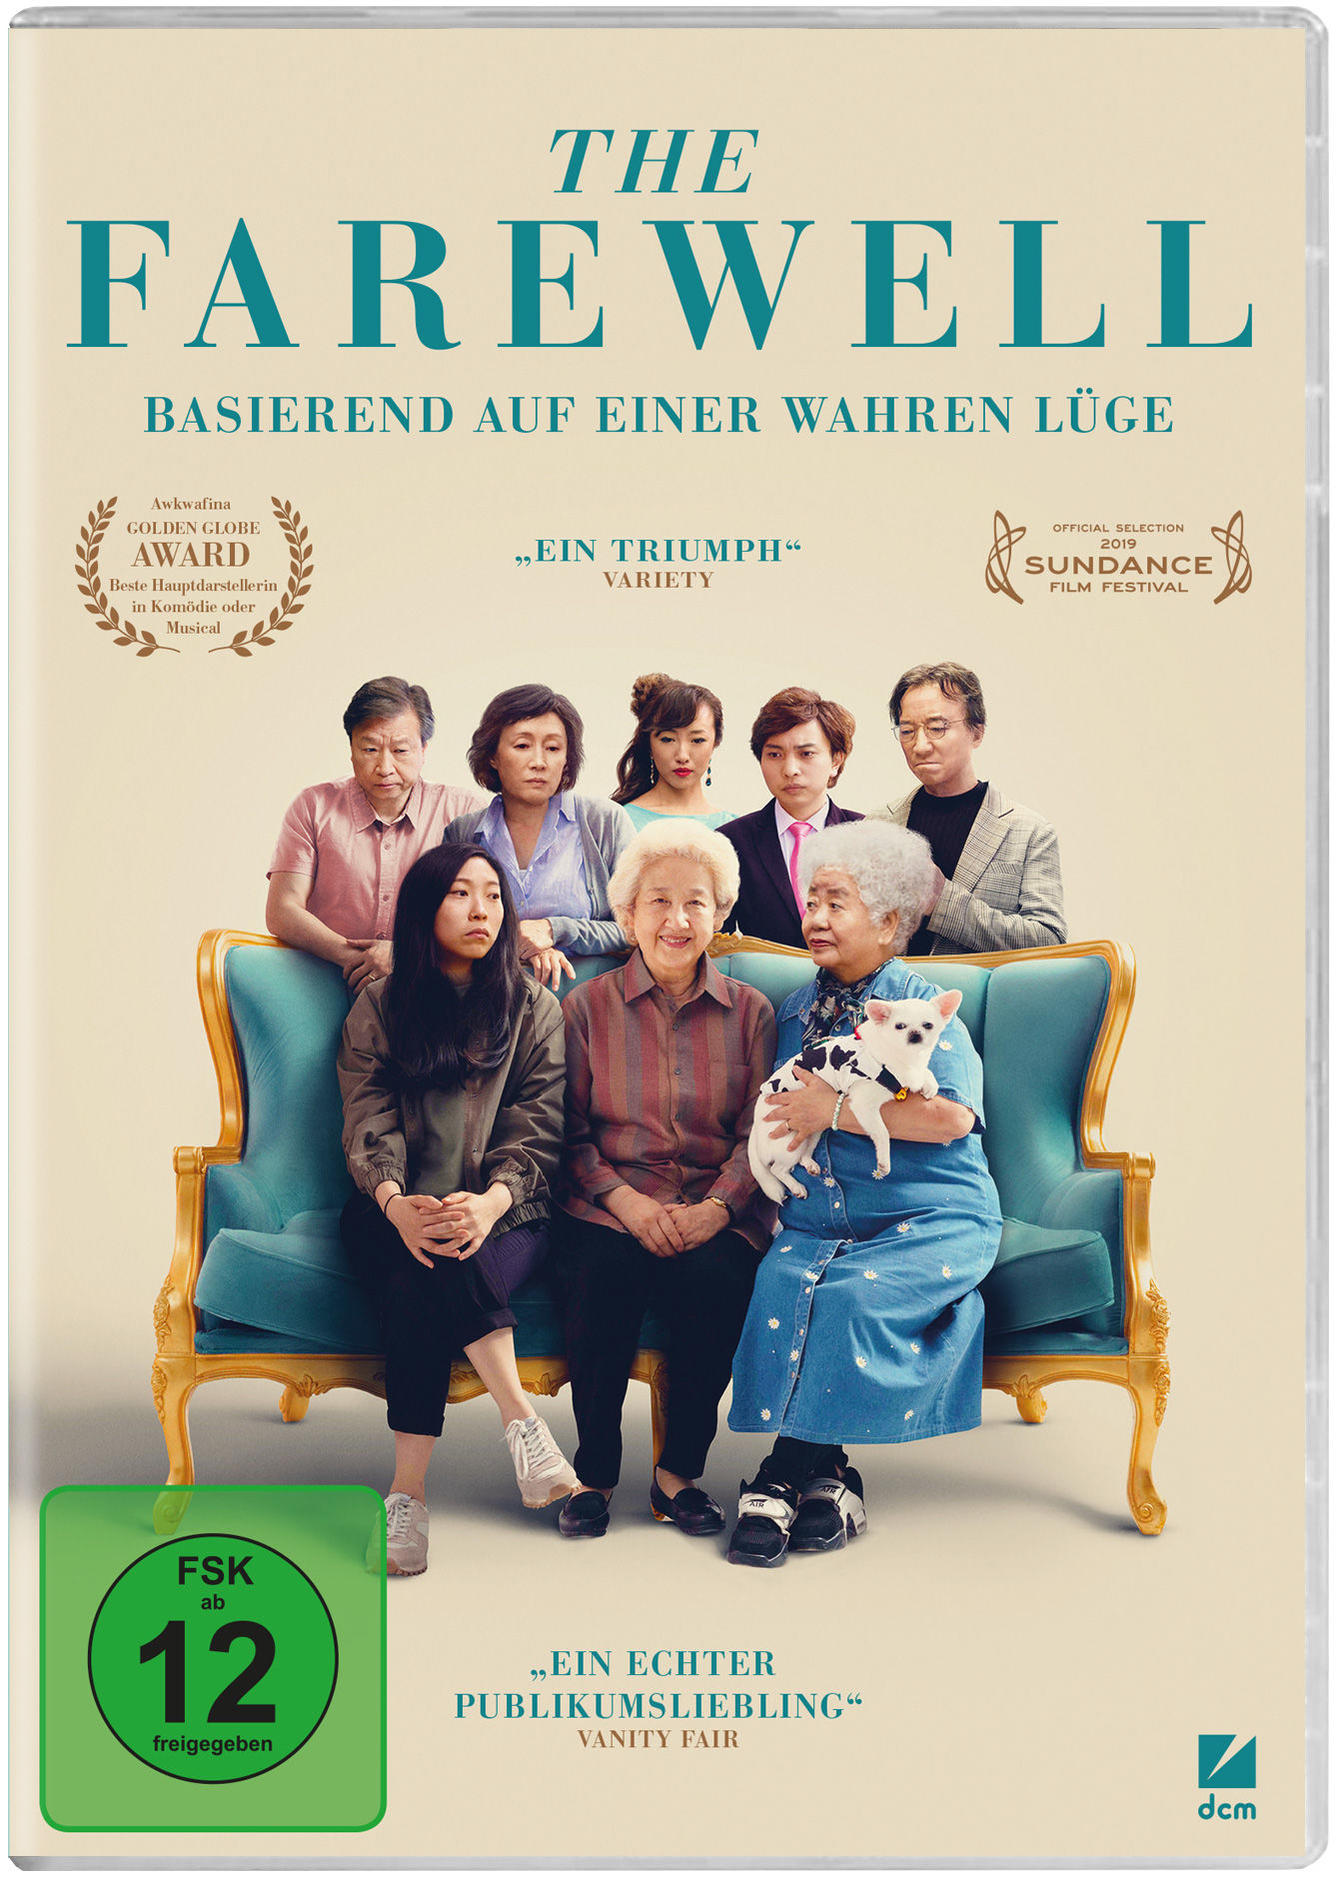 The DVD Farewell